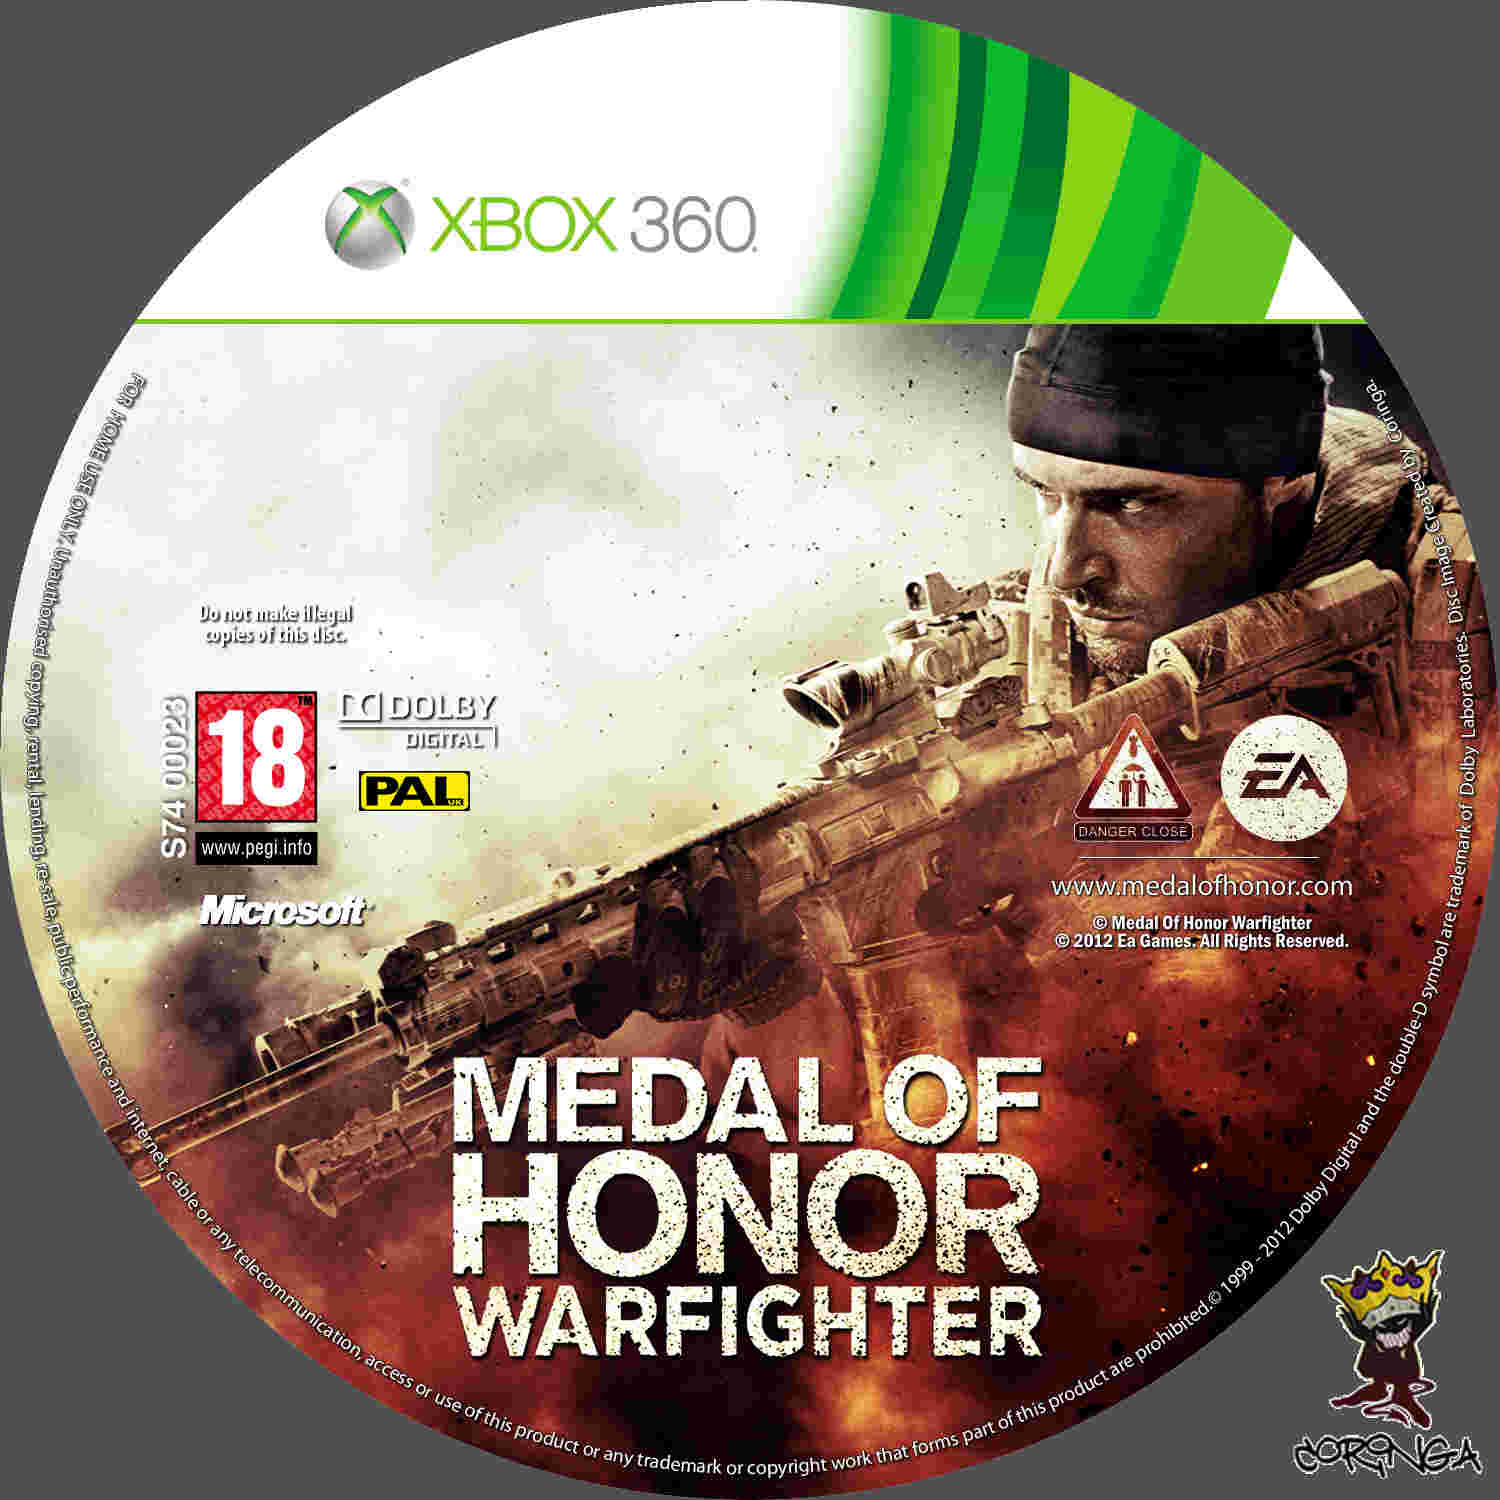 Medal of honor коды. Medal of Honor Xbox 360 обложка. Medal of Honor ps3 обложка. Medal of Honor Warfighter Xbox 360. Xbox 360 обложка диска Medal of Honor Warfighter.